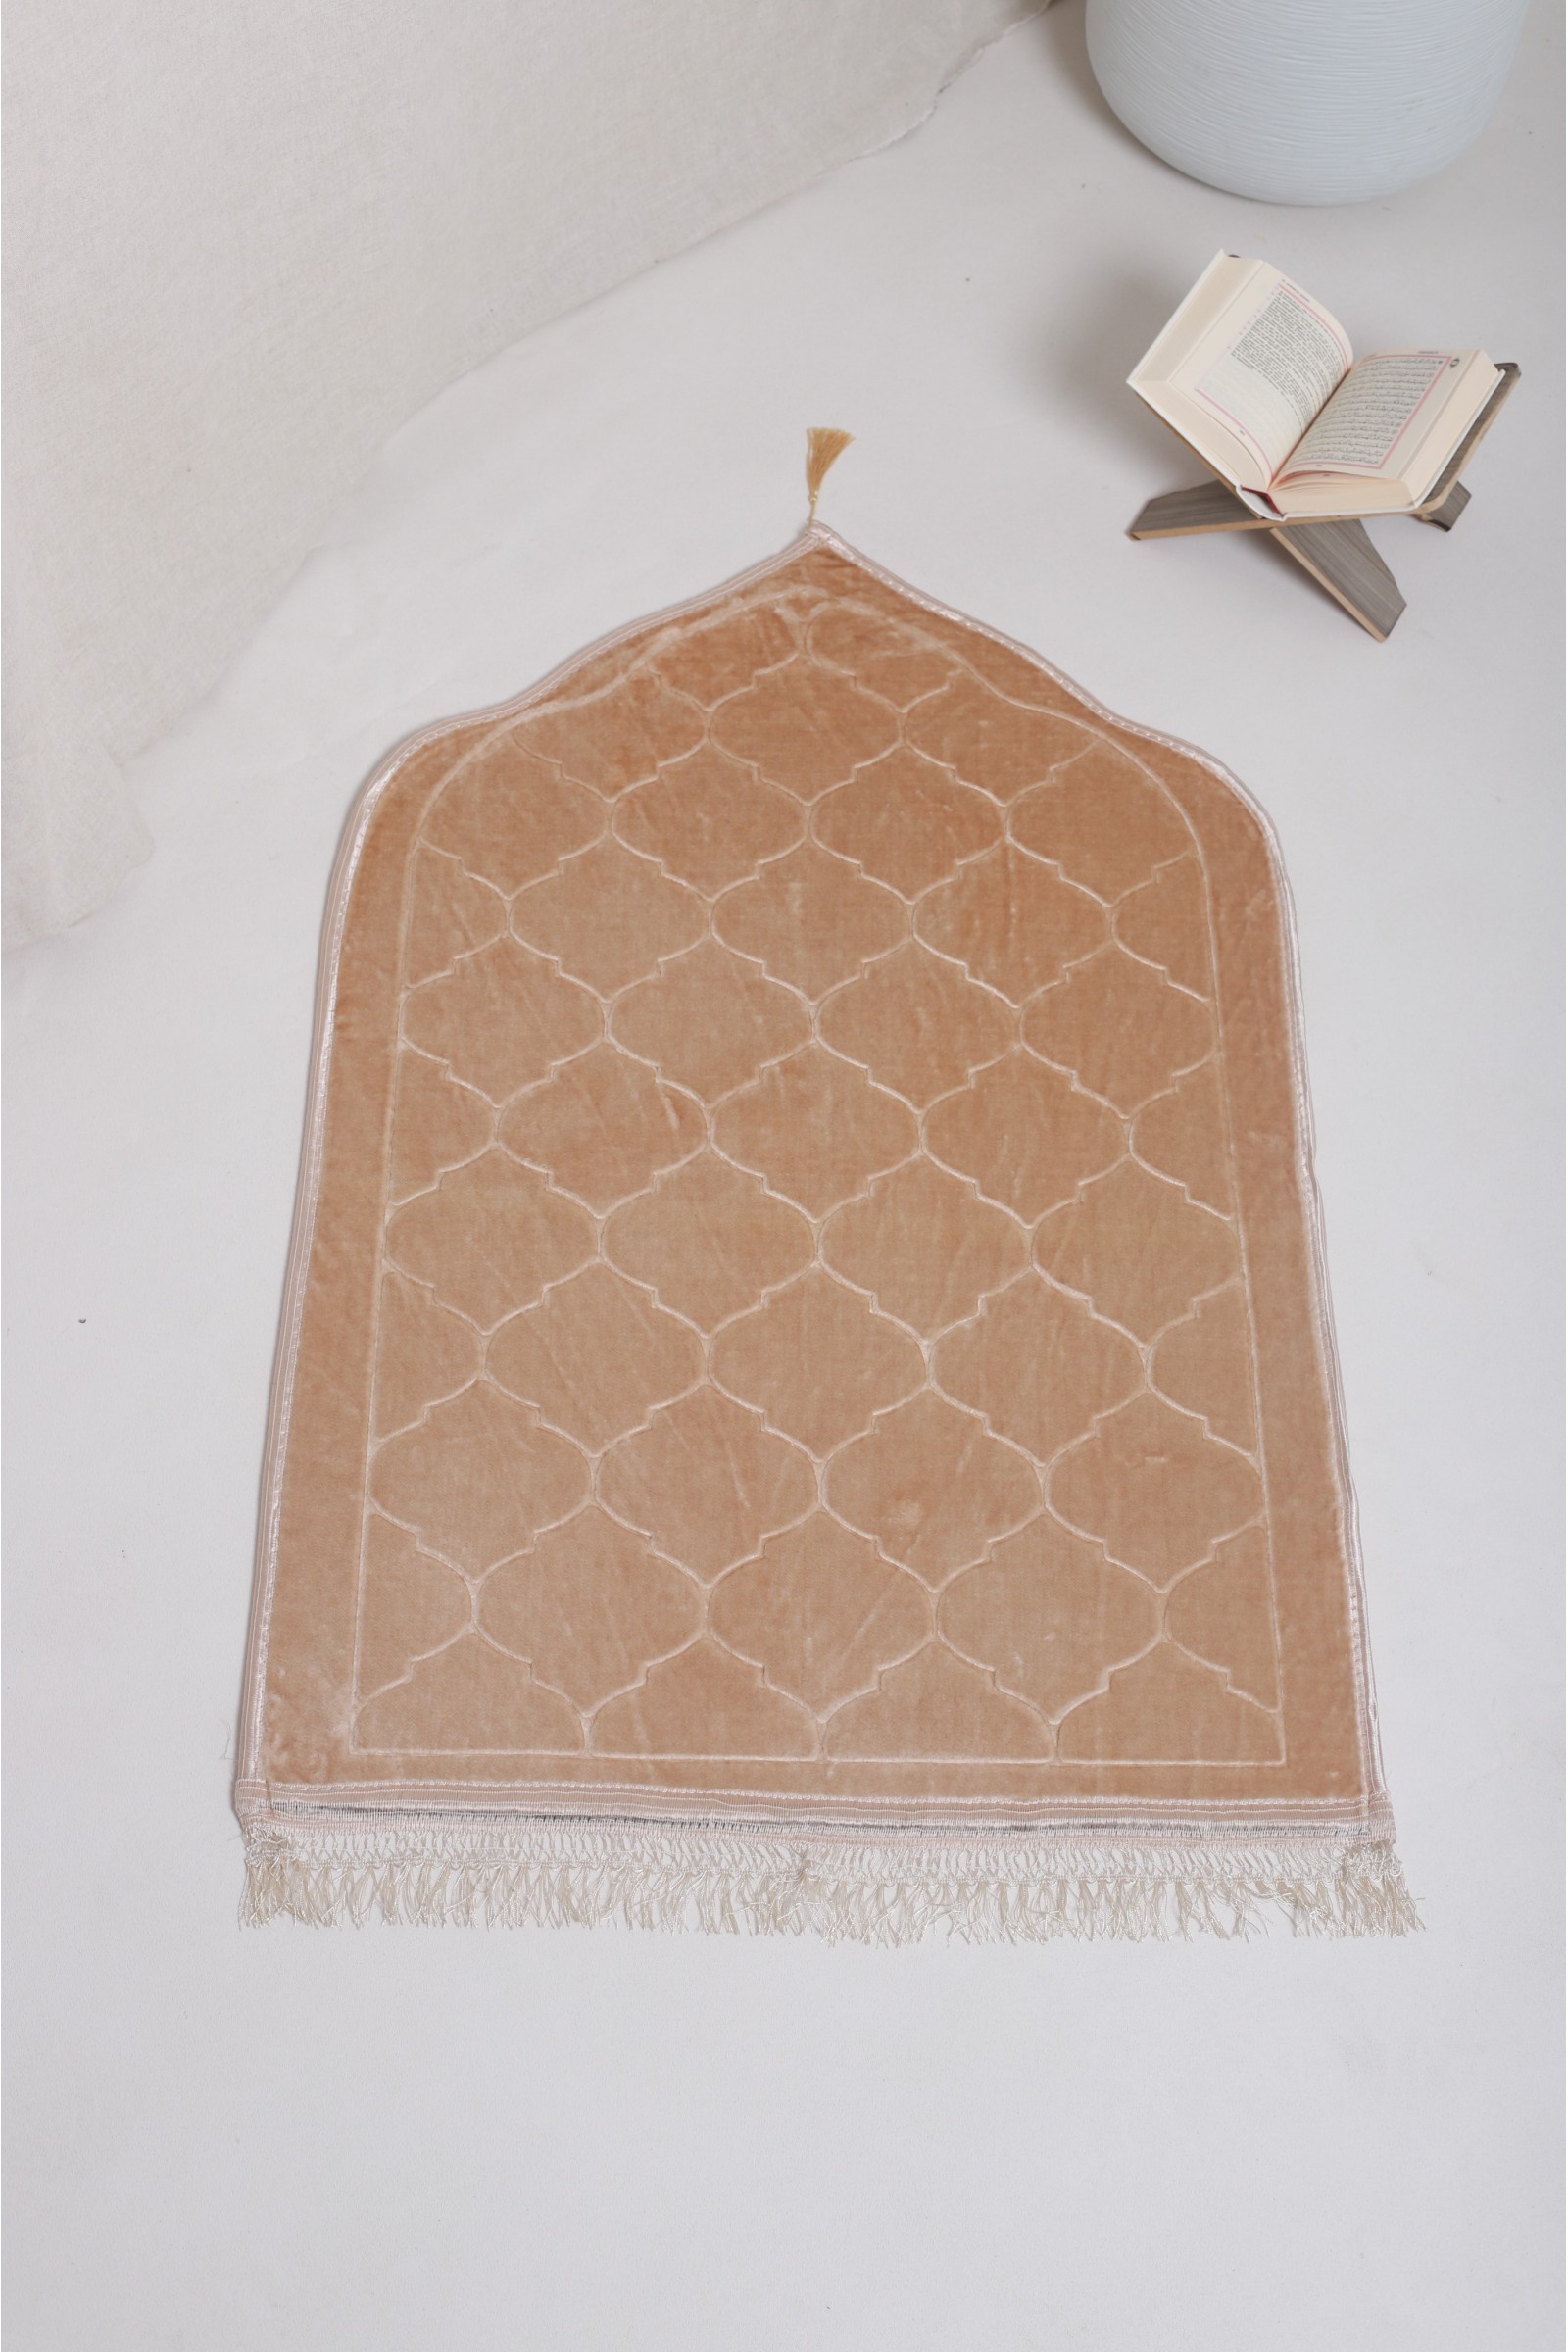 Thick Islam prayer rug for Muslim men and women for Ramadan